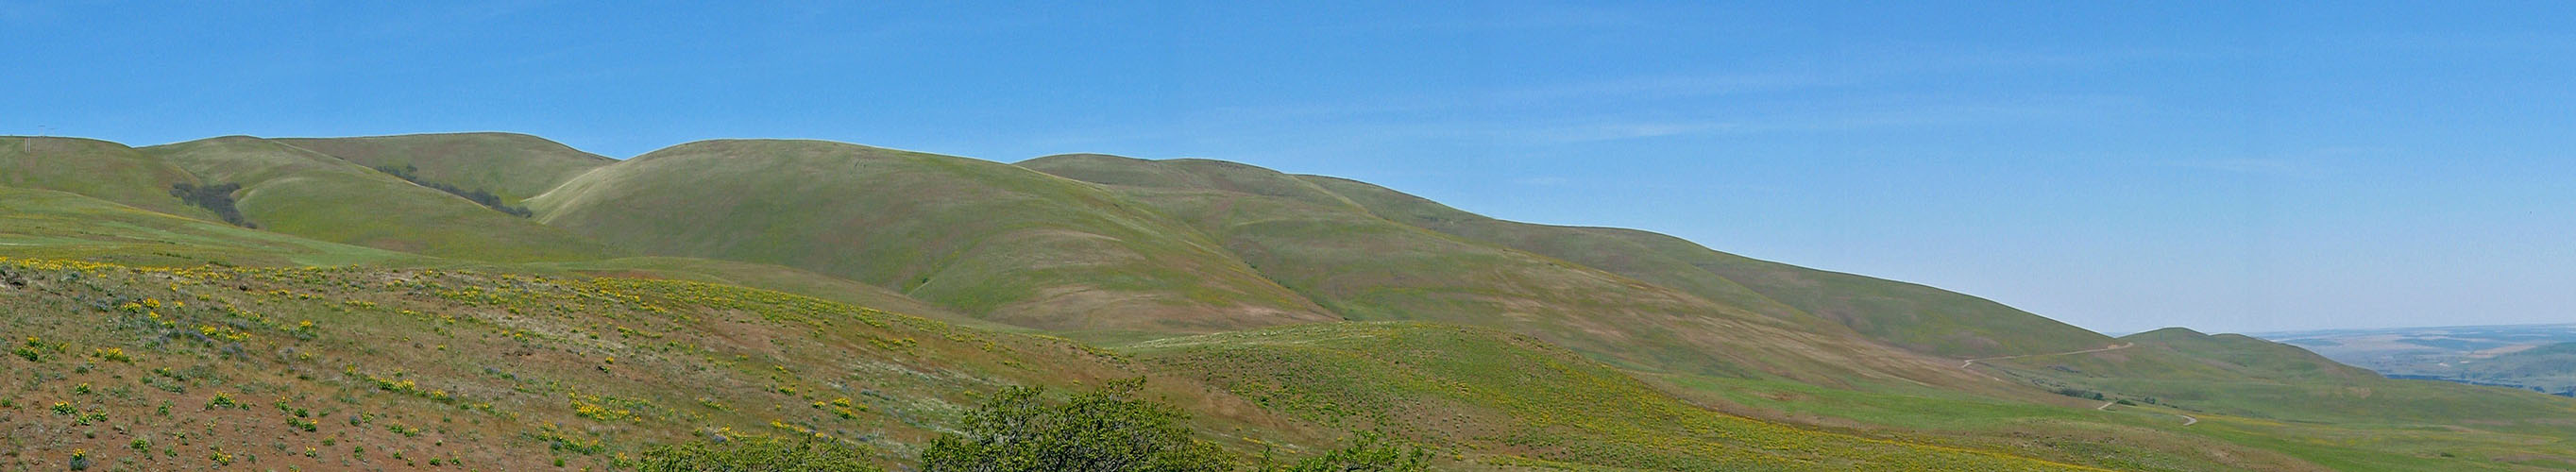 Columbia Hills panorama [Dalles Mountain Ranch, Columbia Hills State Park, Klickitat County, Washington]